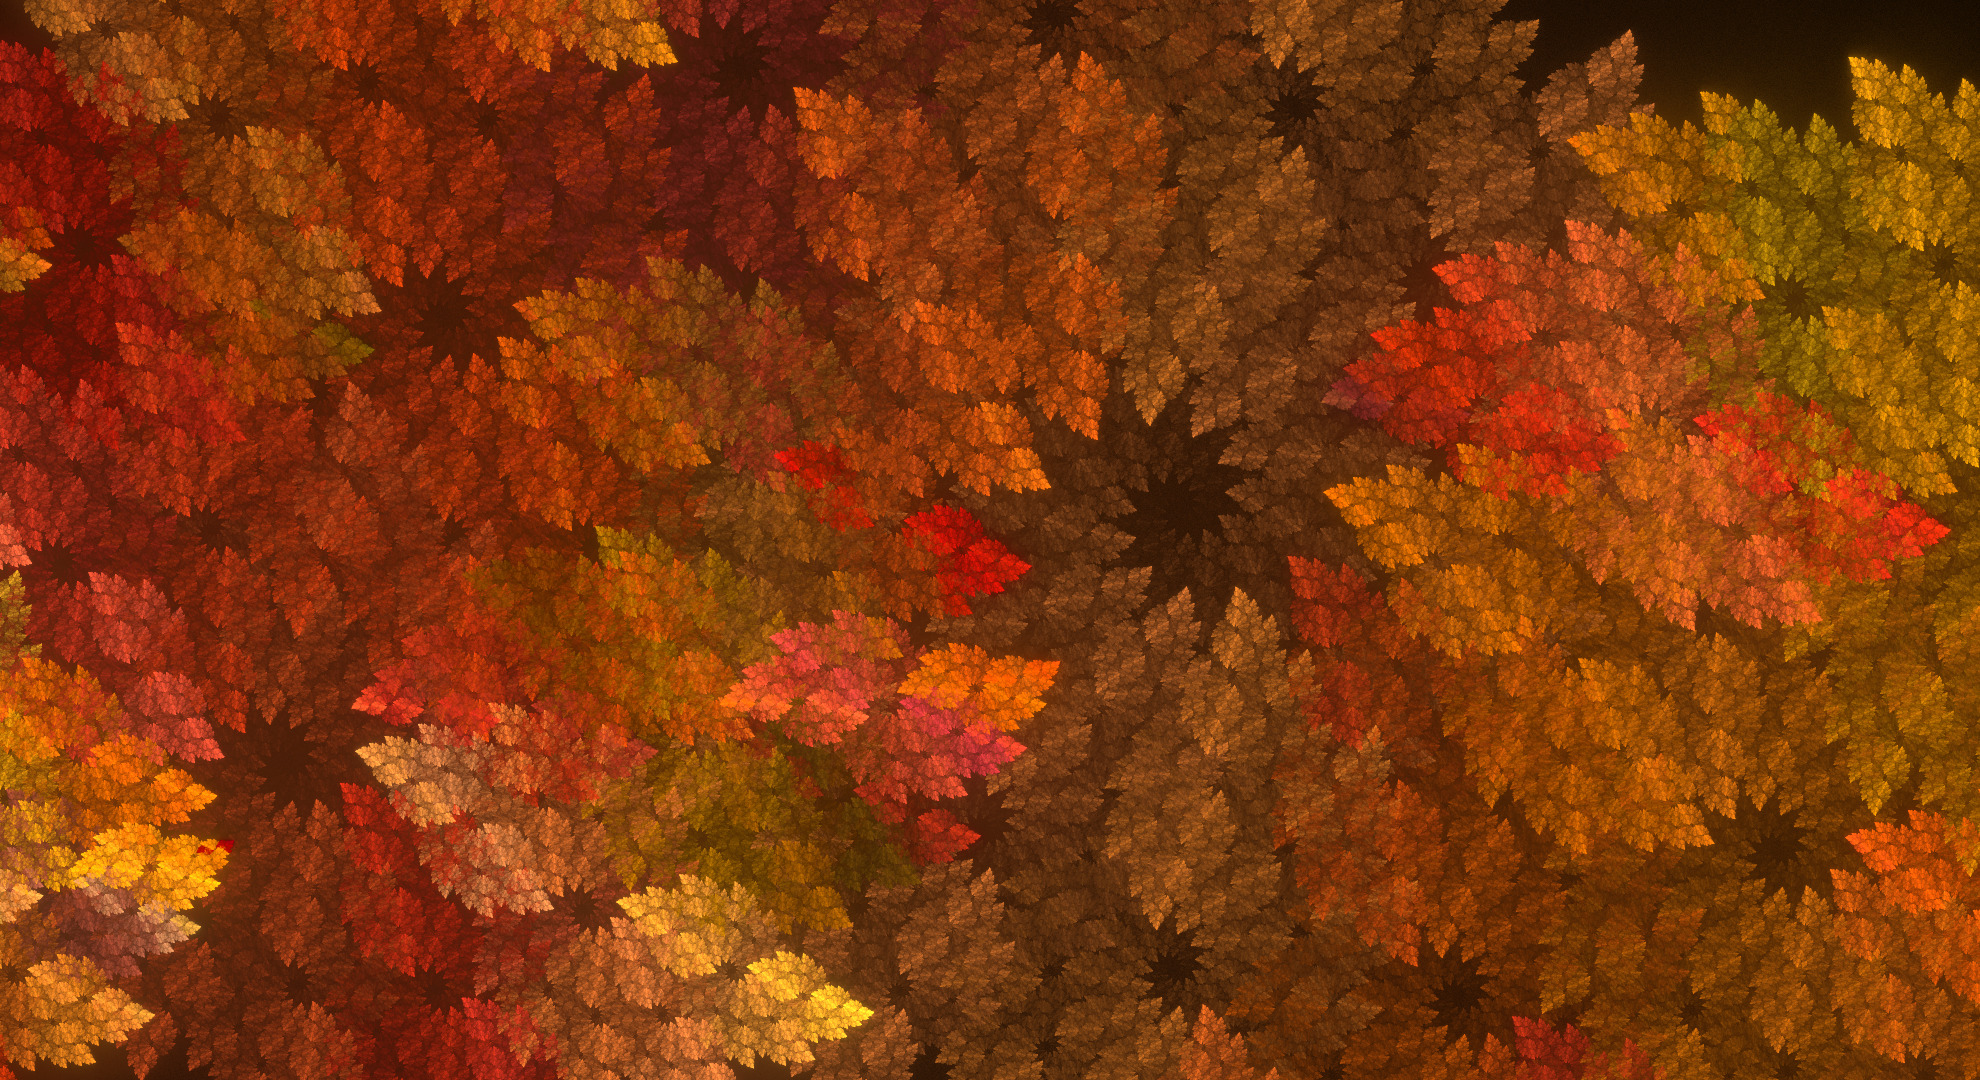 ixel 3 autumn background